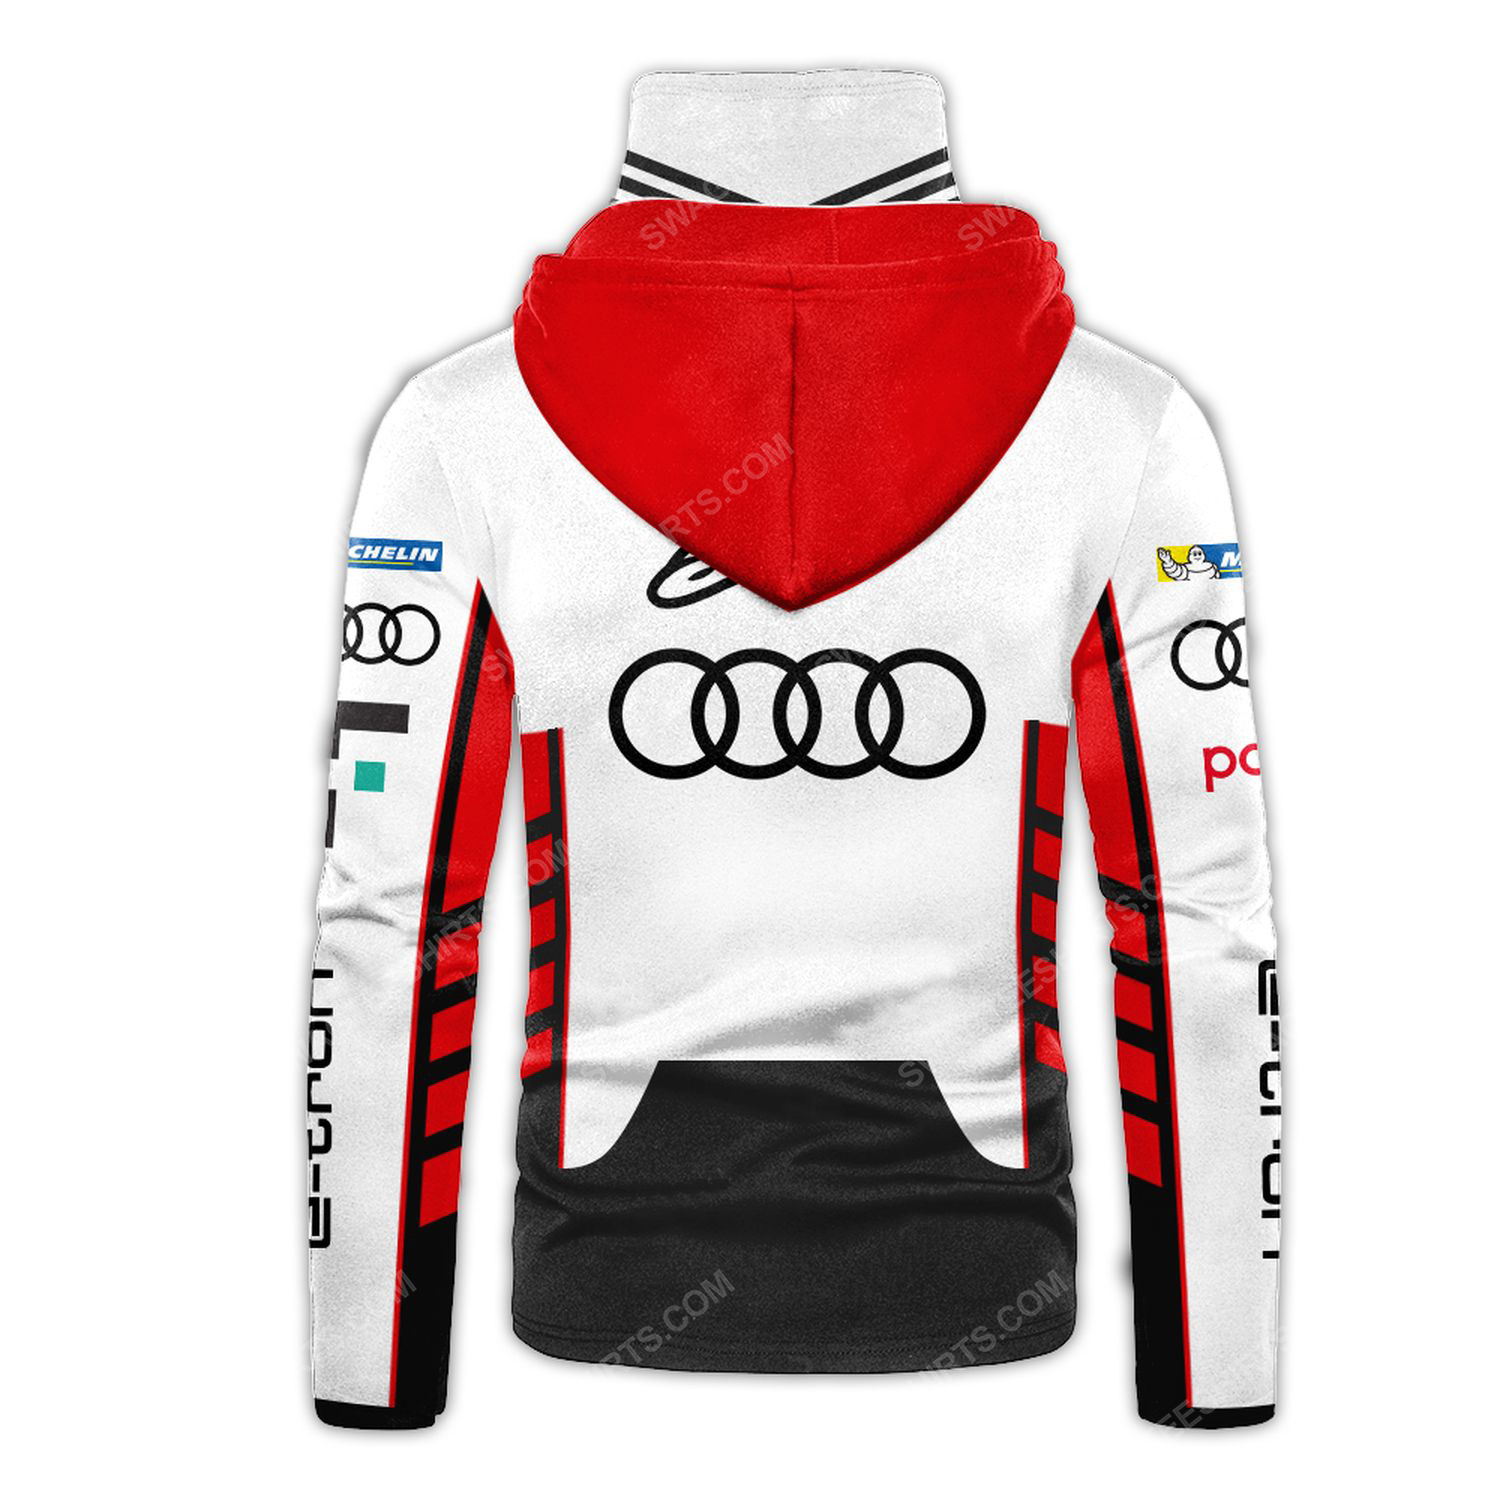 Audi e-tron schwarzer racing team motorsport full printing hoodie mask - back